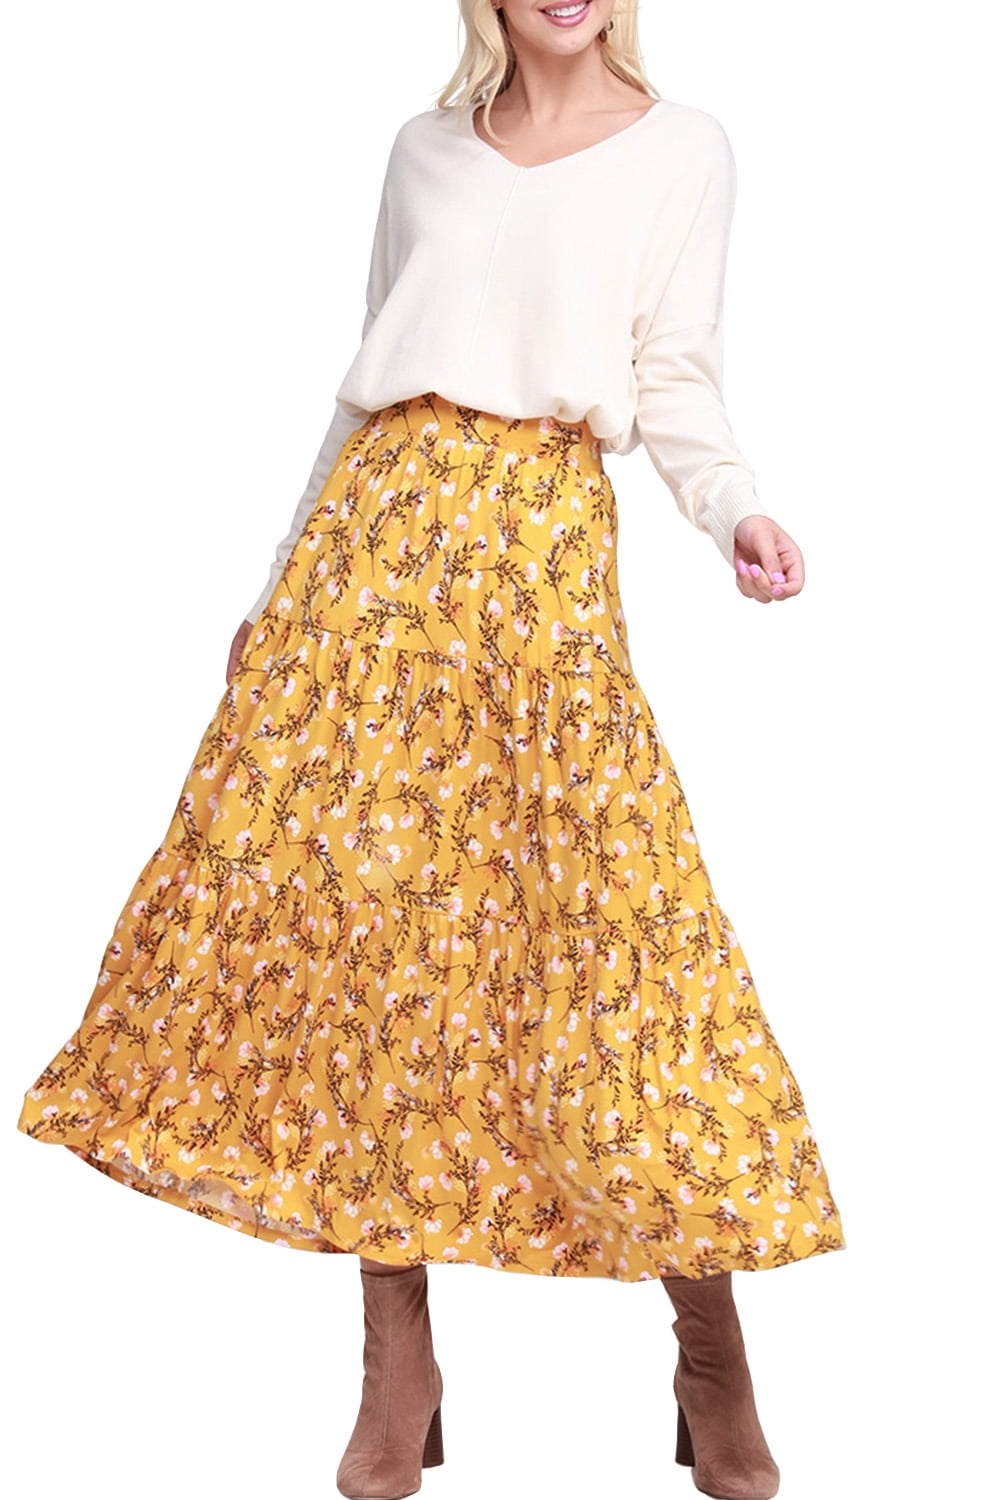 Doublju Women's Elastic Waist Layered Shirring Maxi Skirt with Plus Size